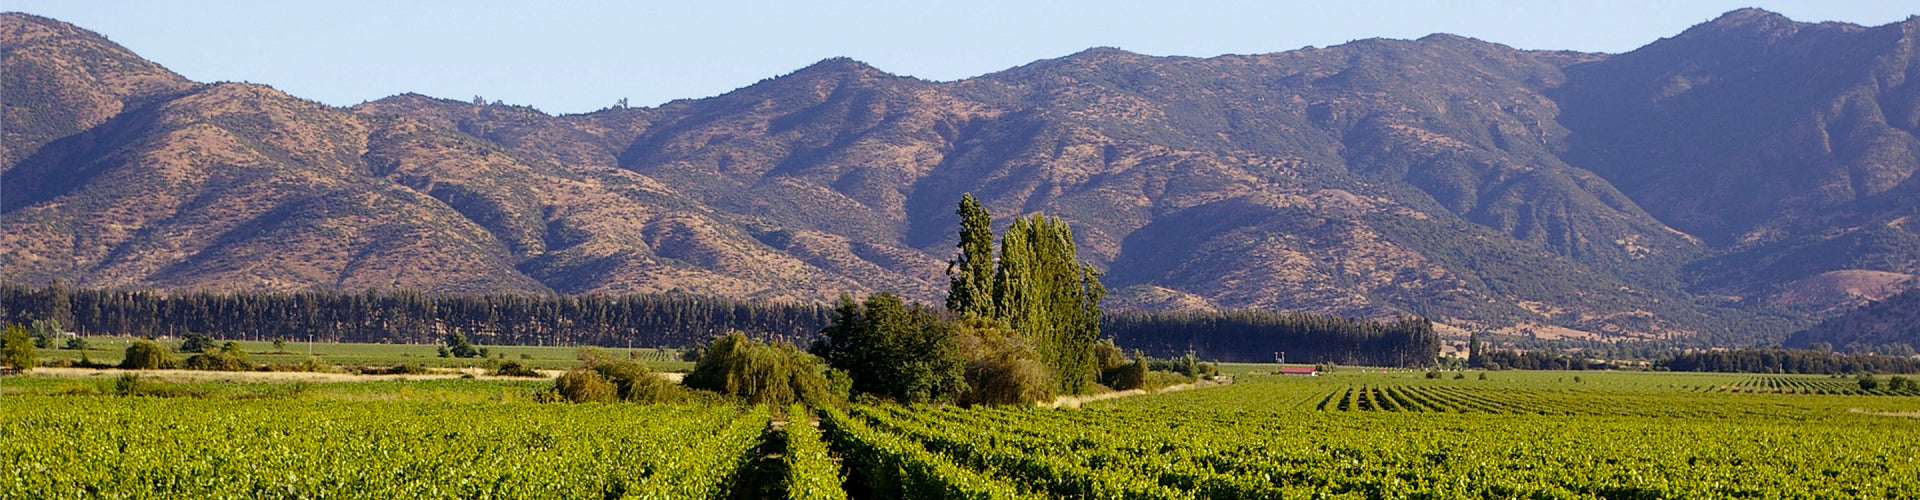 The Viña Los Vascos Vineyard in Colchagua Valley, Chile